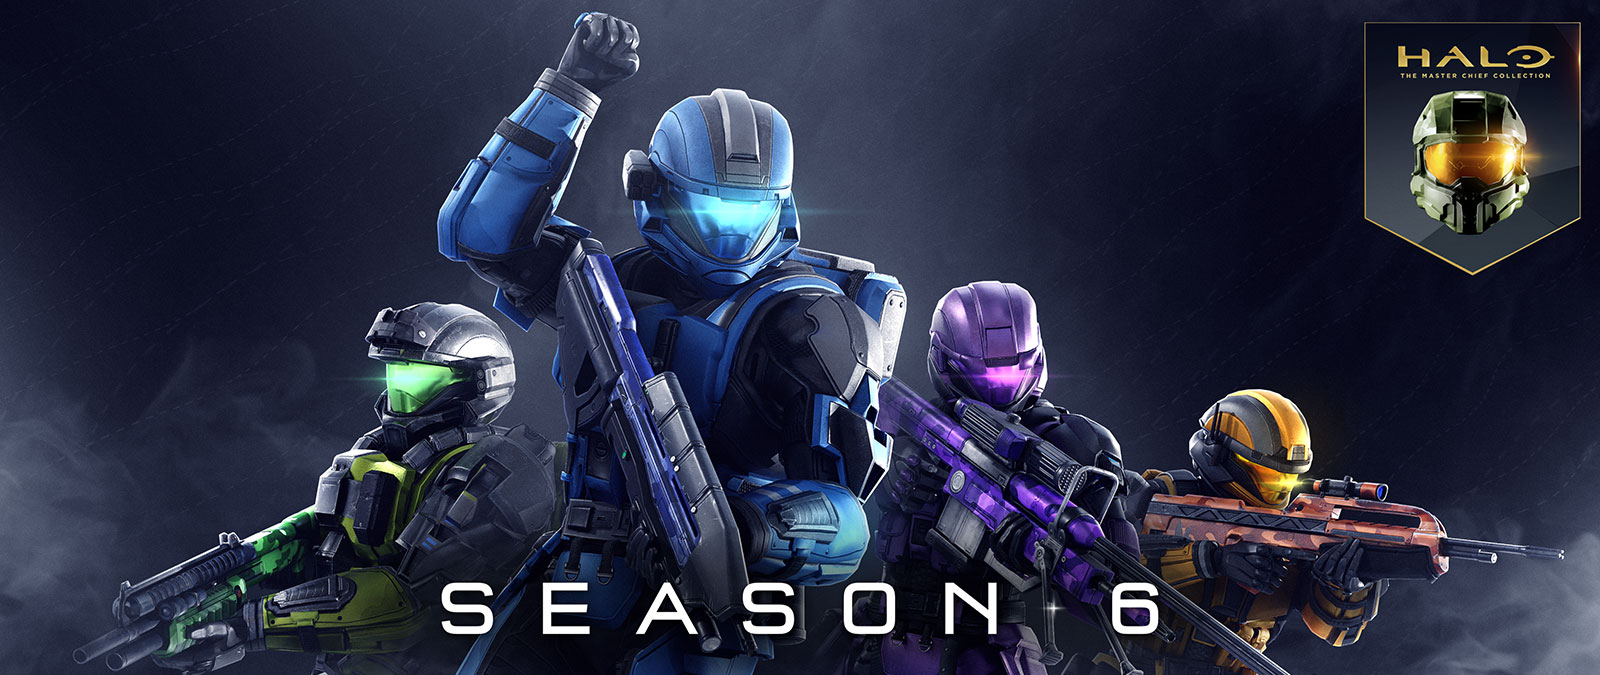 Halo: The Master Chief Collection, Season 6, Spartans i fargerik rustning poserer med pistoler